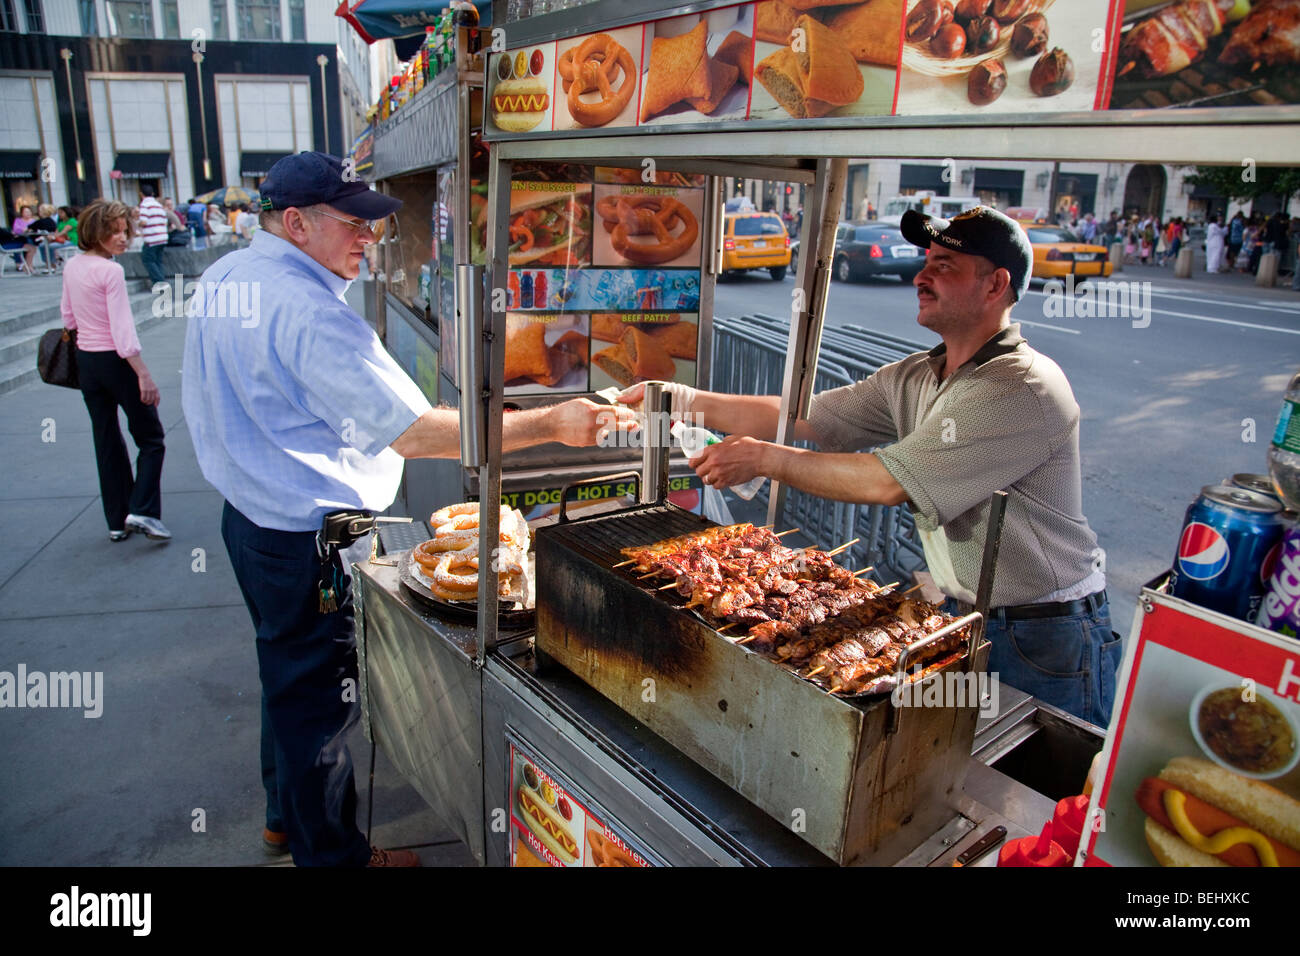 street-food-vendor-in-manhattan-in-new-york-city-BEHXKC.jpg